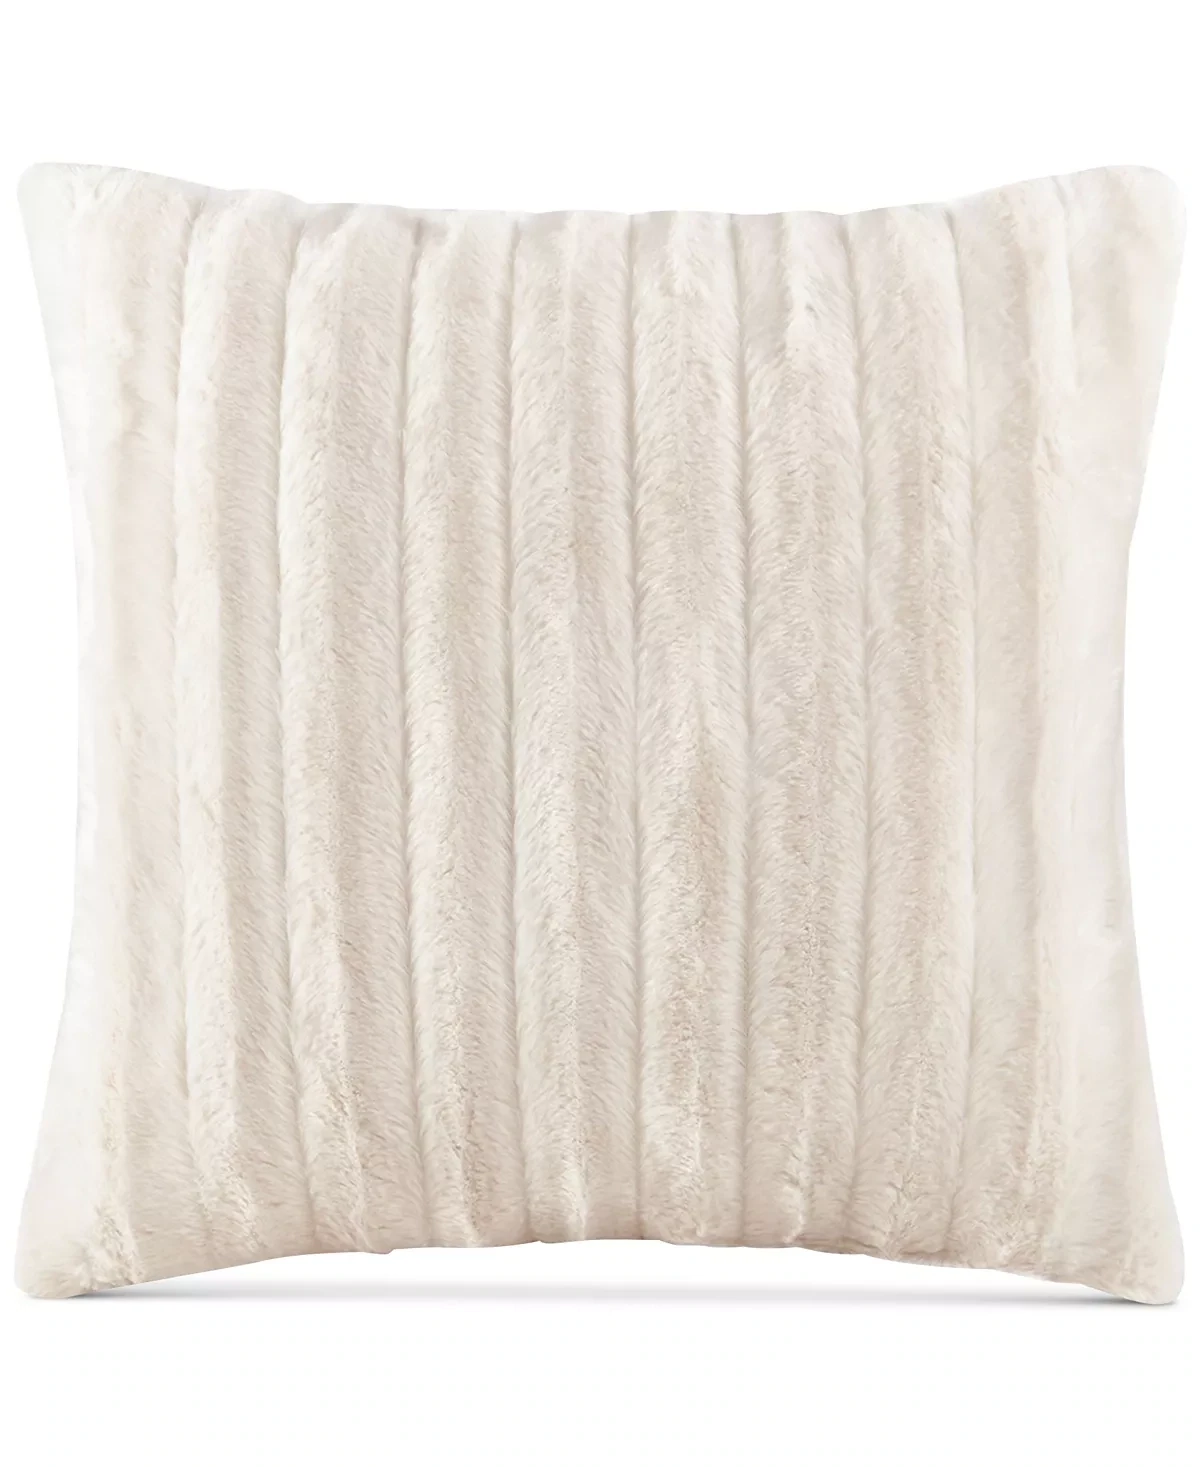 Madison Park Duke Ribbed Faux-Fur Decorative Pillow, 20" x 20" - Ivory